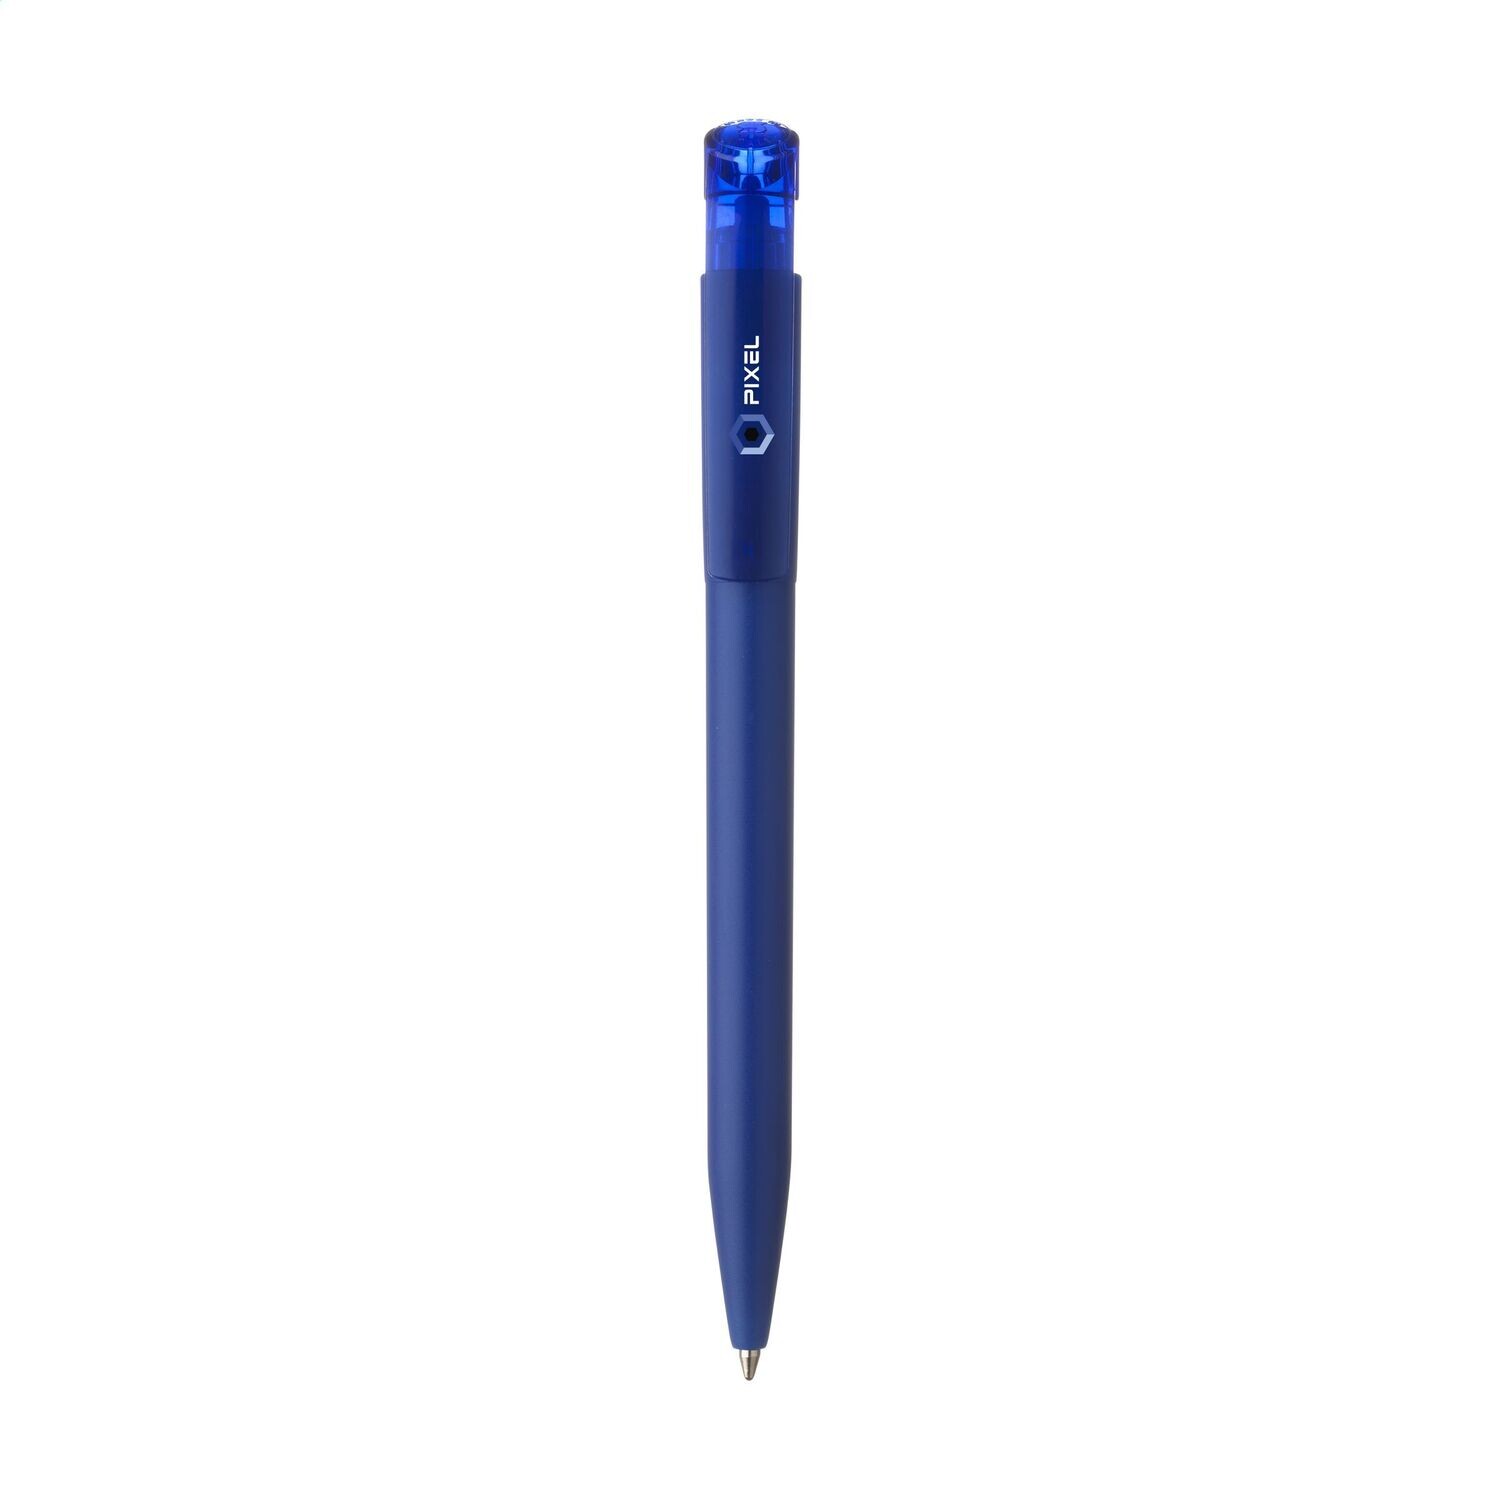 Stilolinea S45 BIO penner